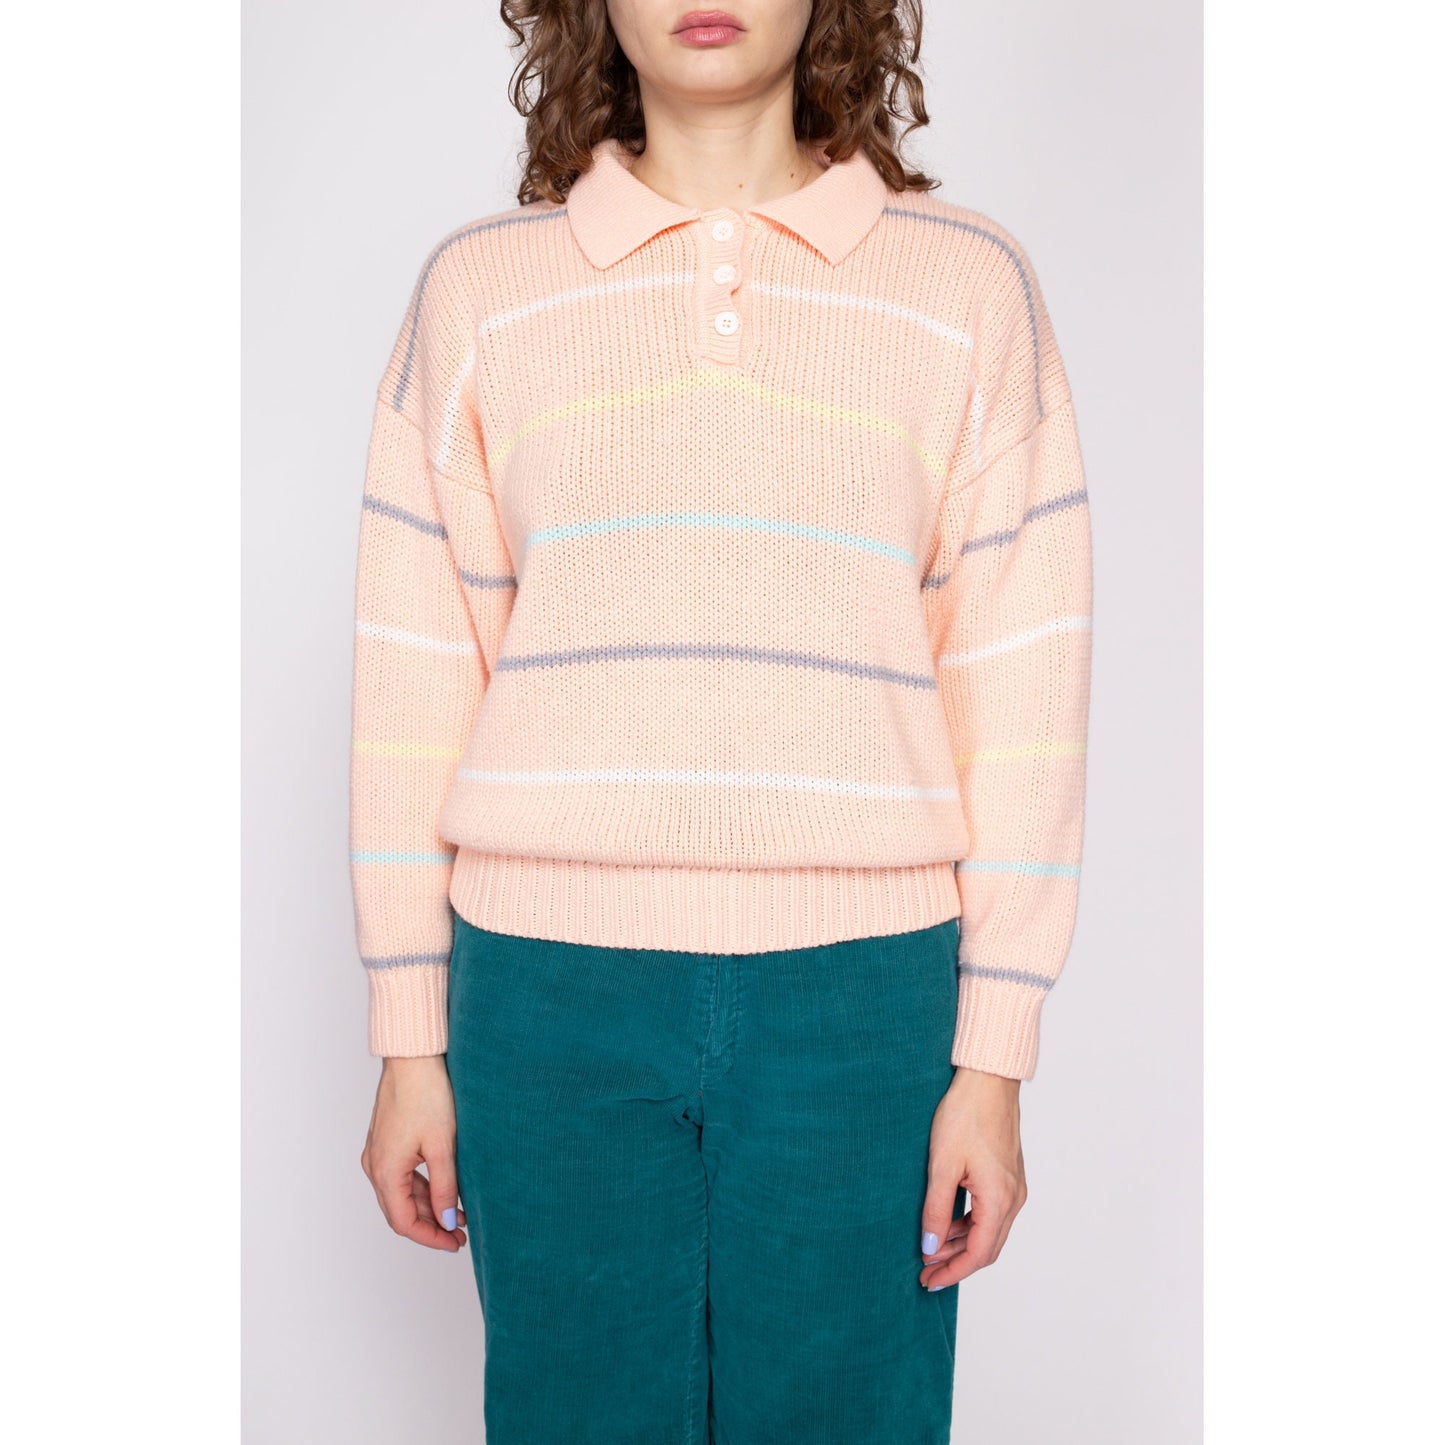 80s Striped Pastel Orange Henley Sweater - Medium | Vintage Collared Knit Pullover Jumper